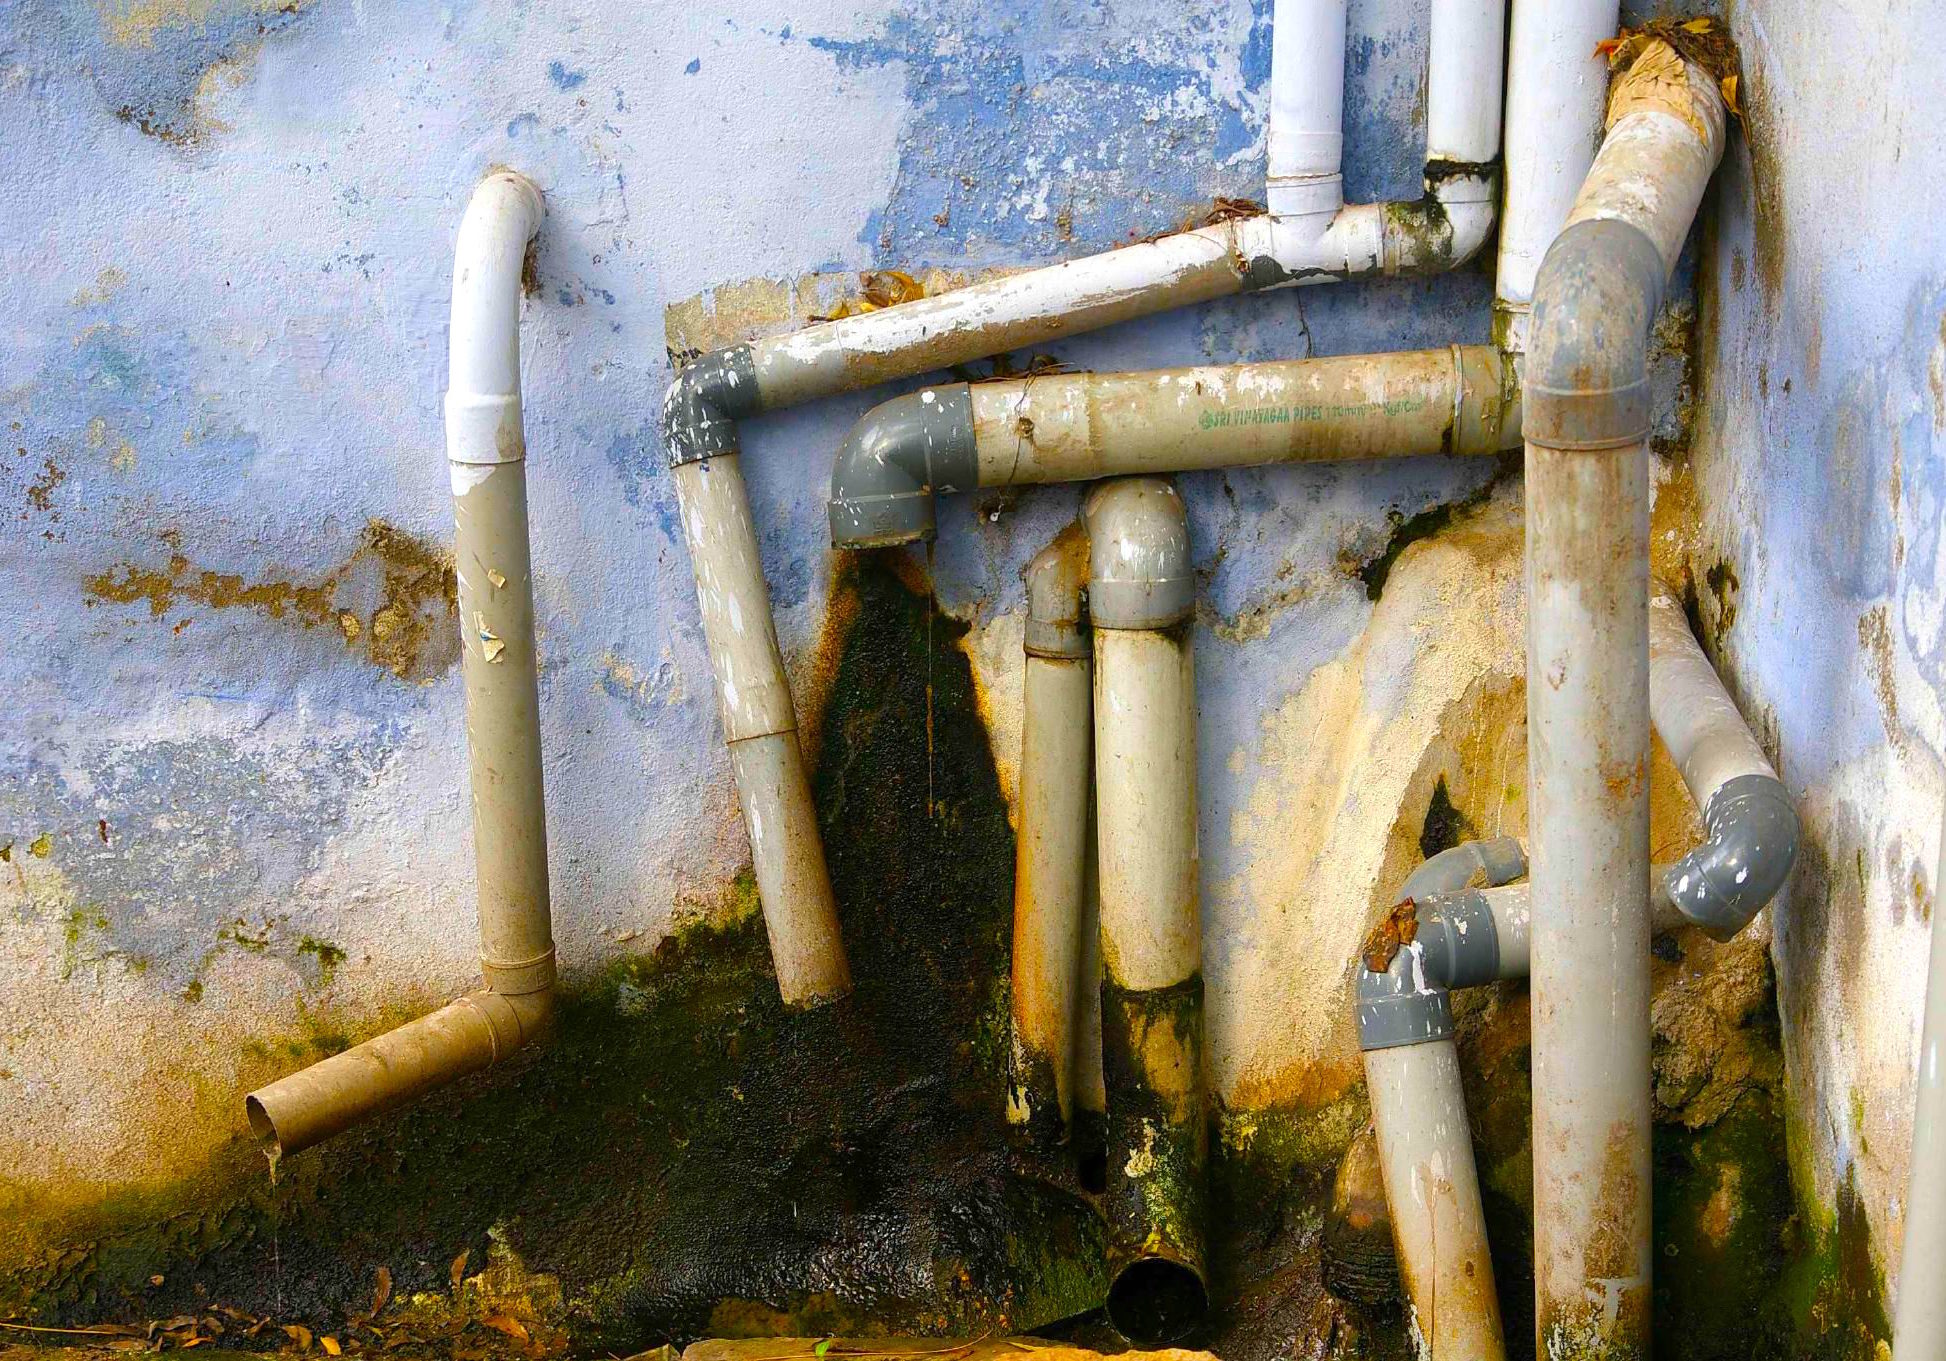 Indian plumbing_Flickr_Andrea Kirkby